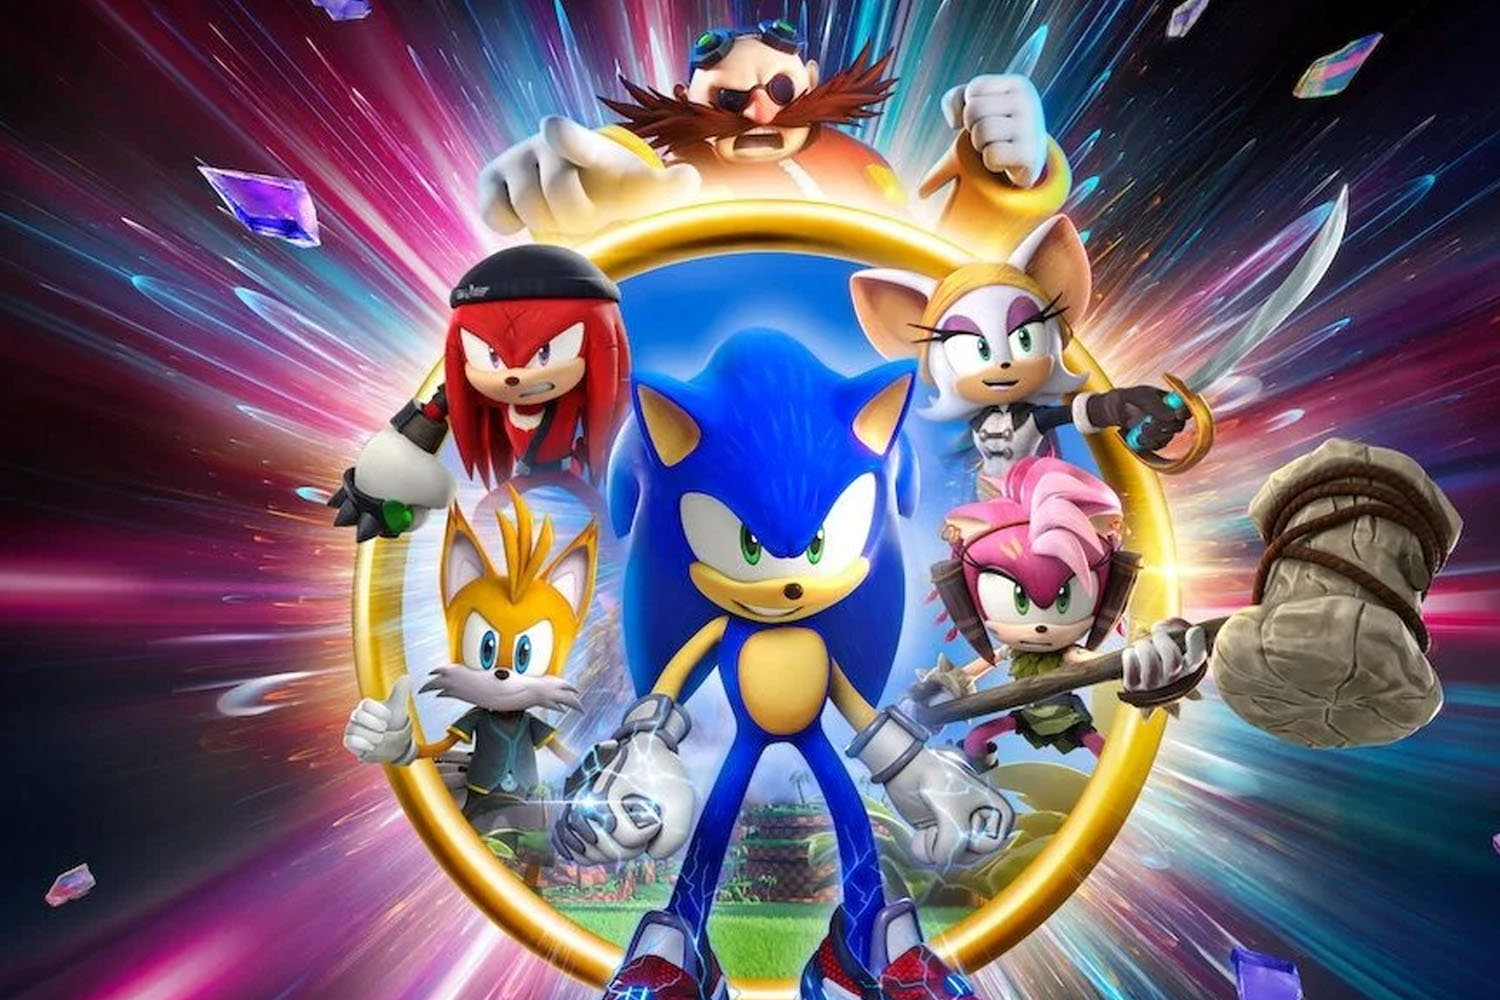 Prime Video: Sonic X - 2ª Temporada